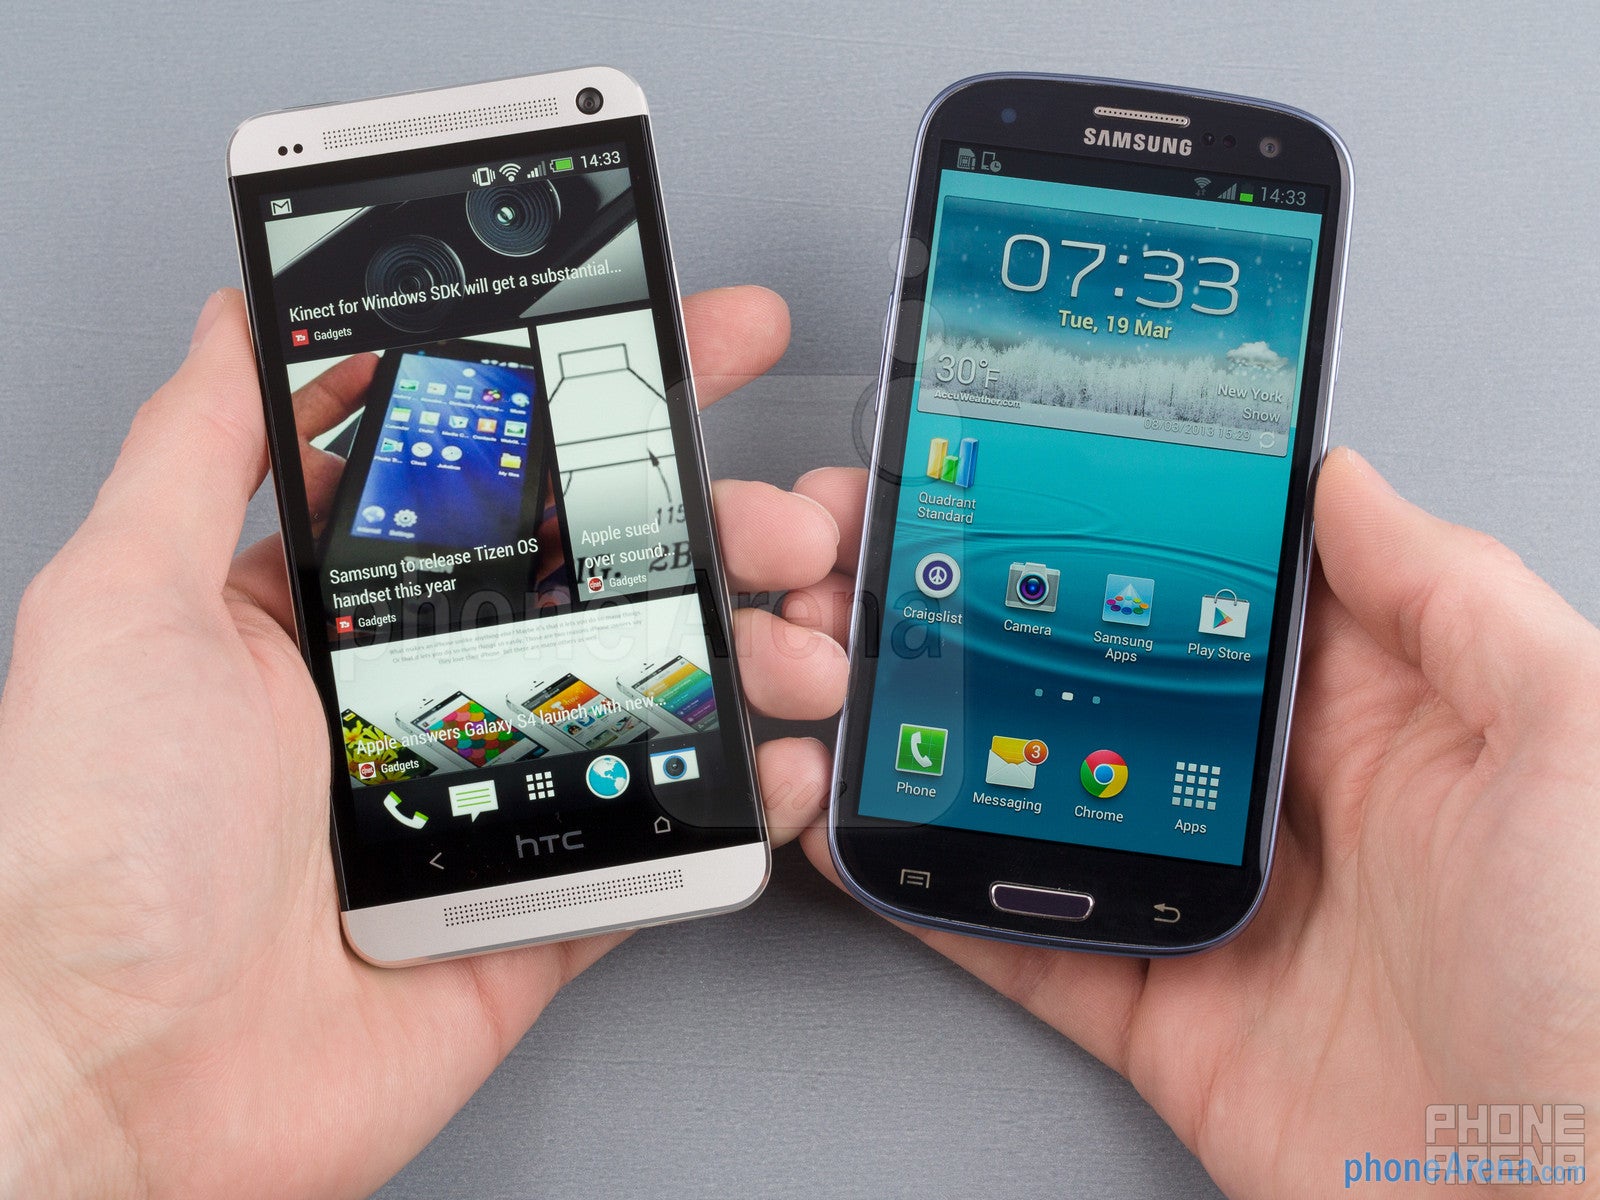 HTC One vs Samsung Galaxy S III